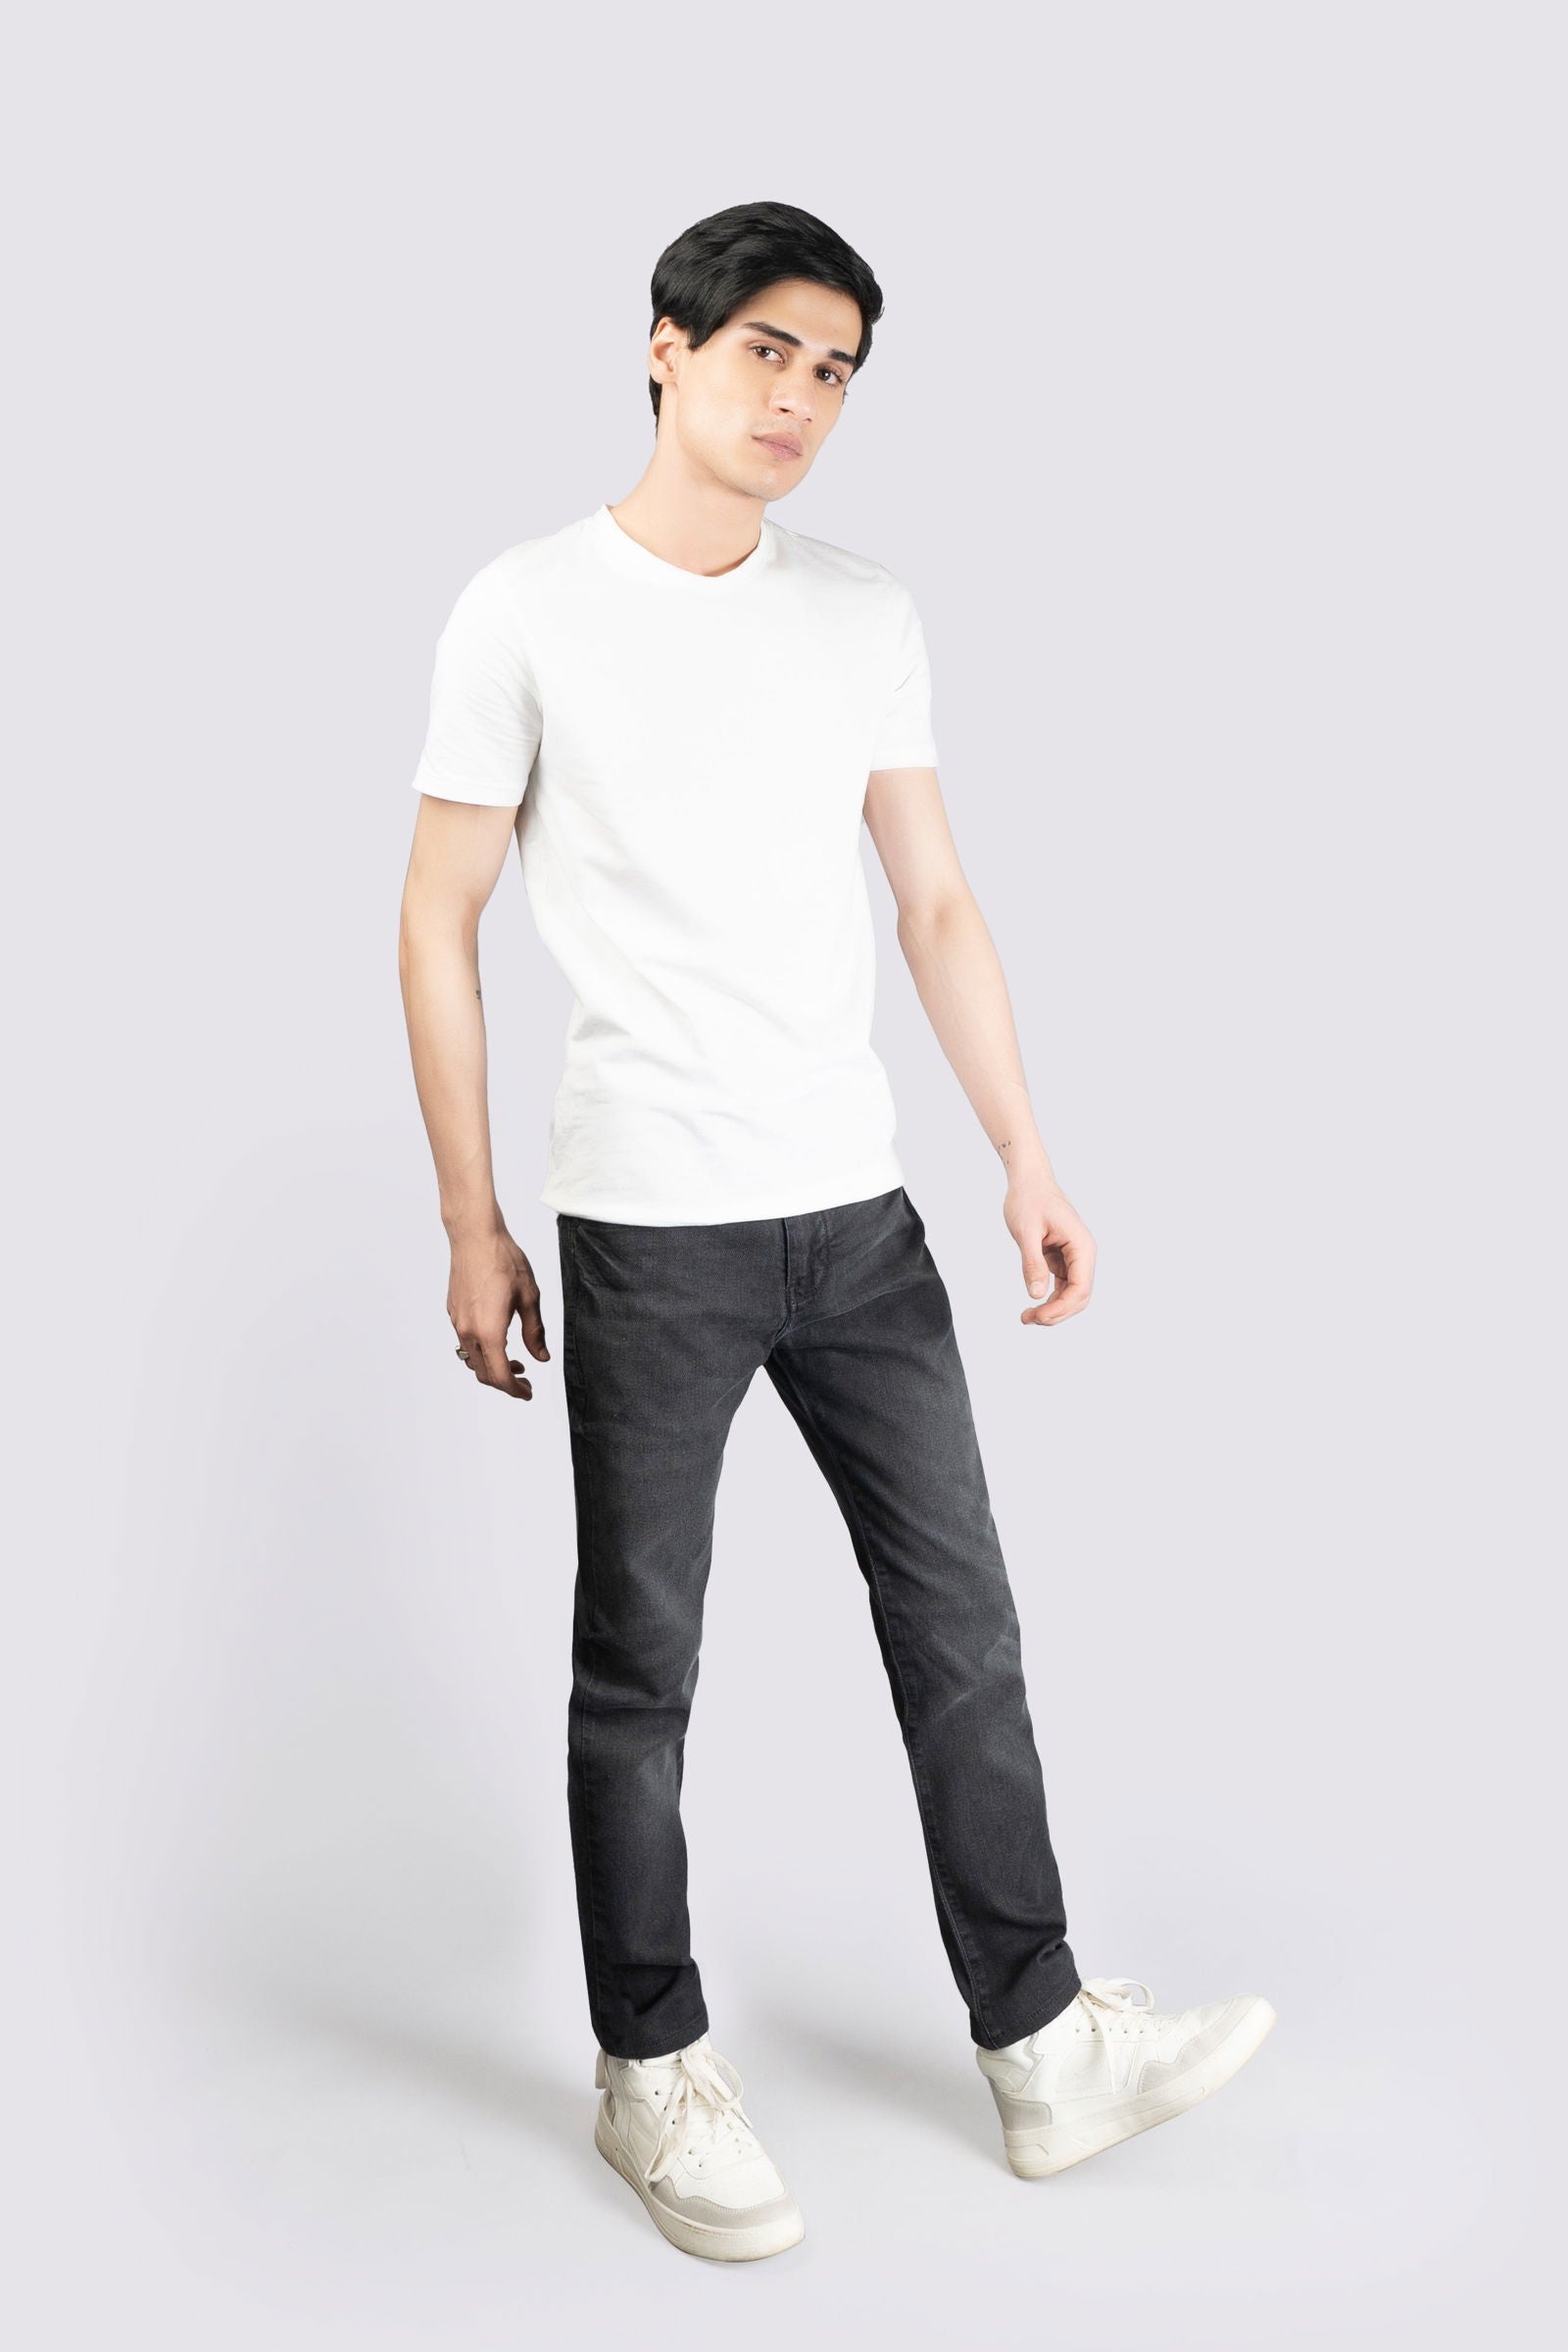 Dark Grey Denim Stretch Jeans - The Axis Clothing